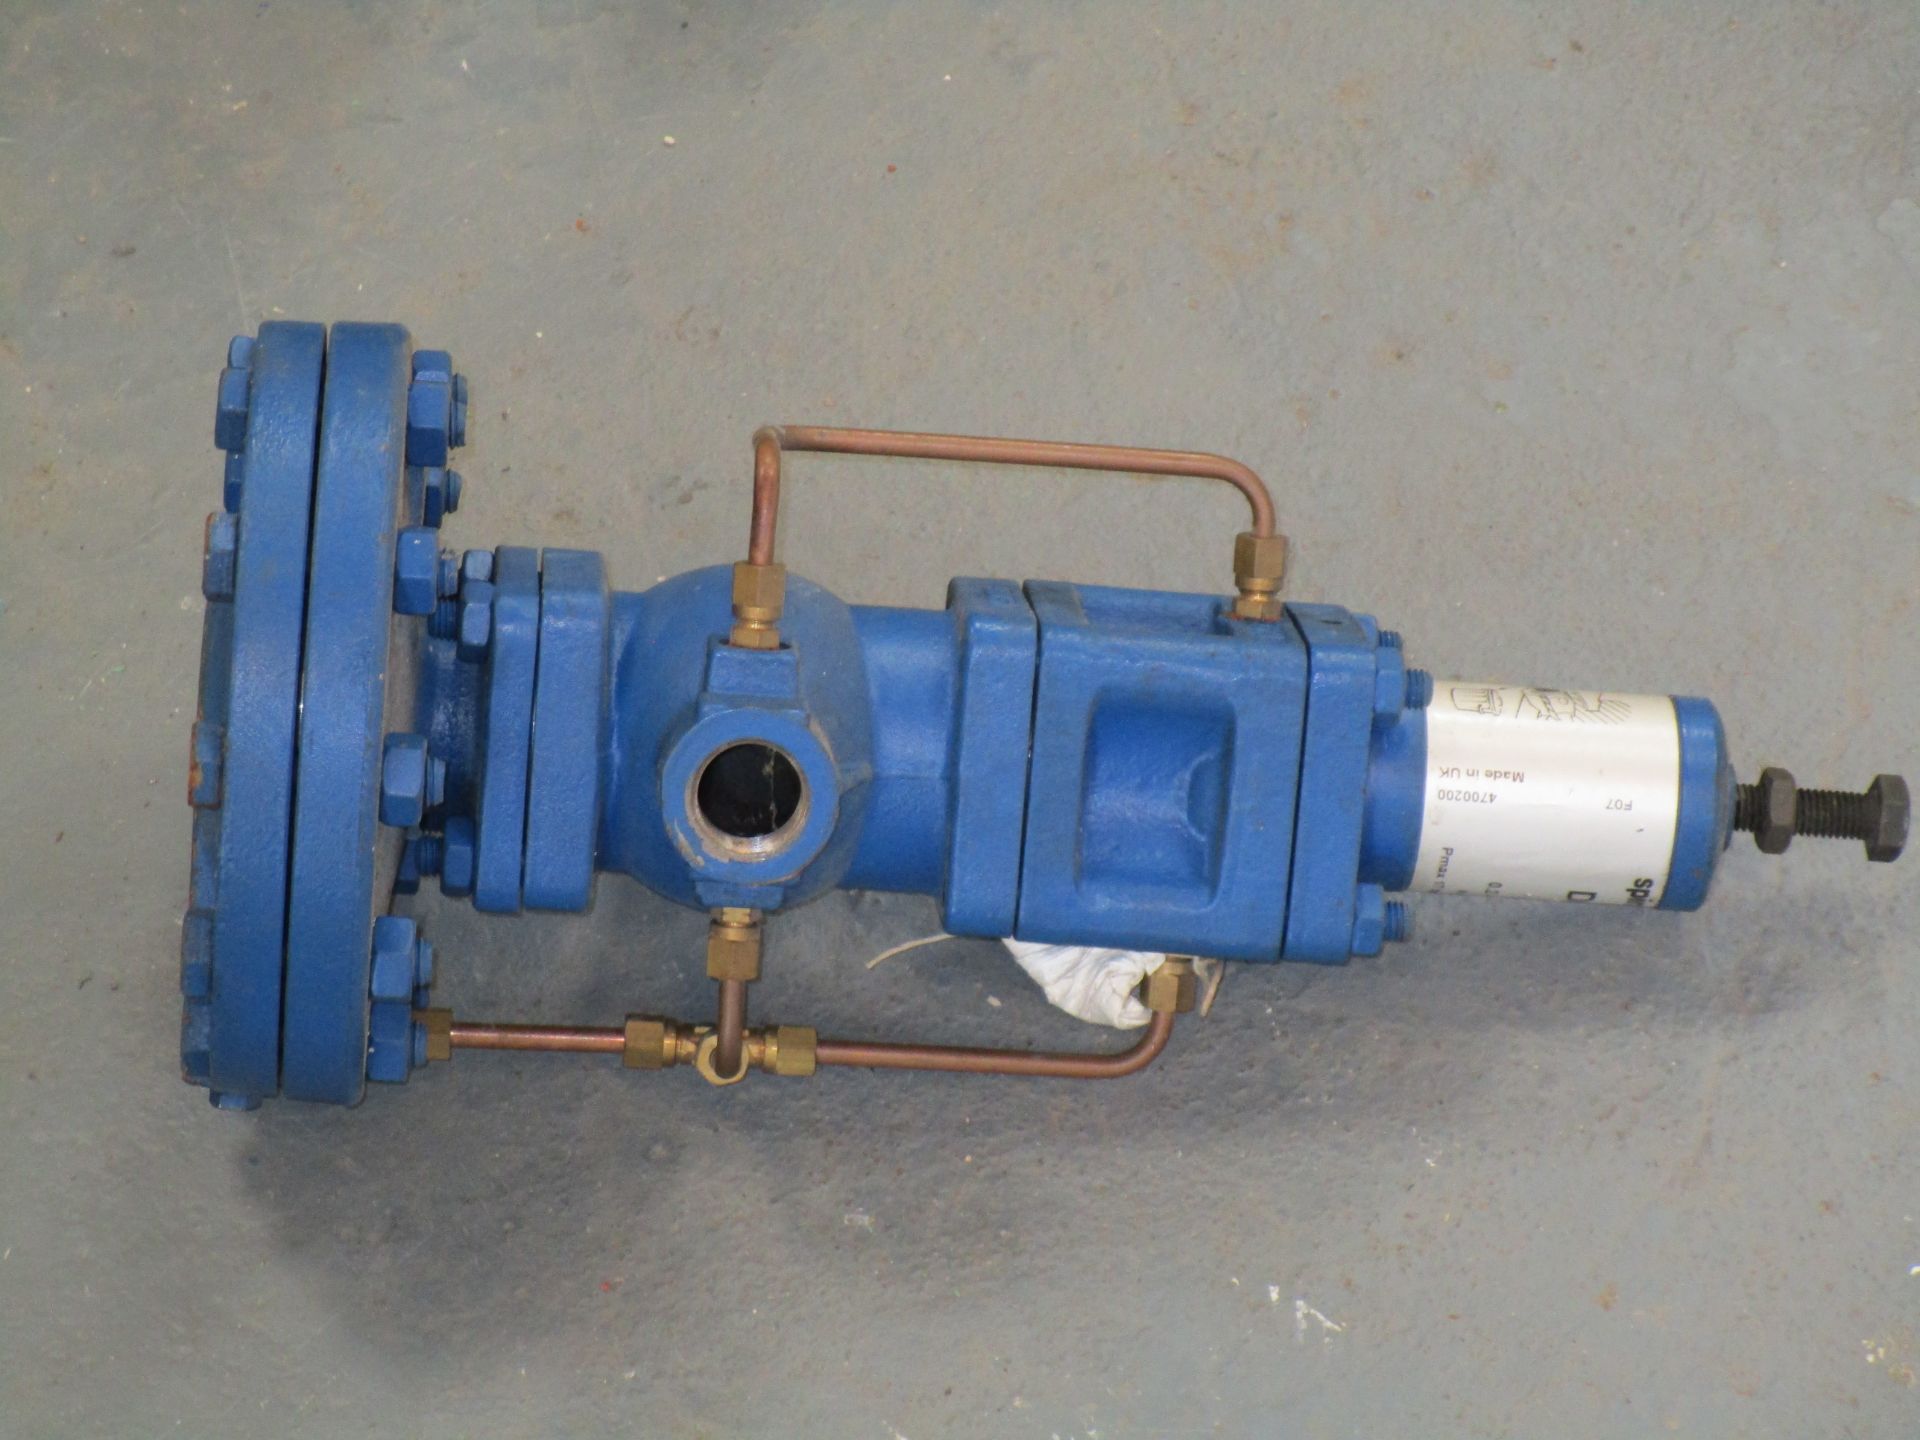 Spirax Sarco Pressure reducing valve